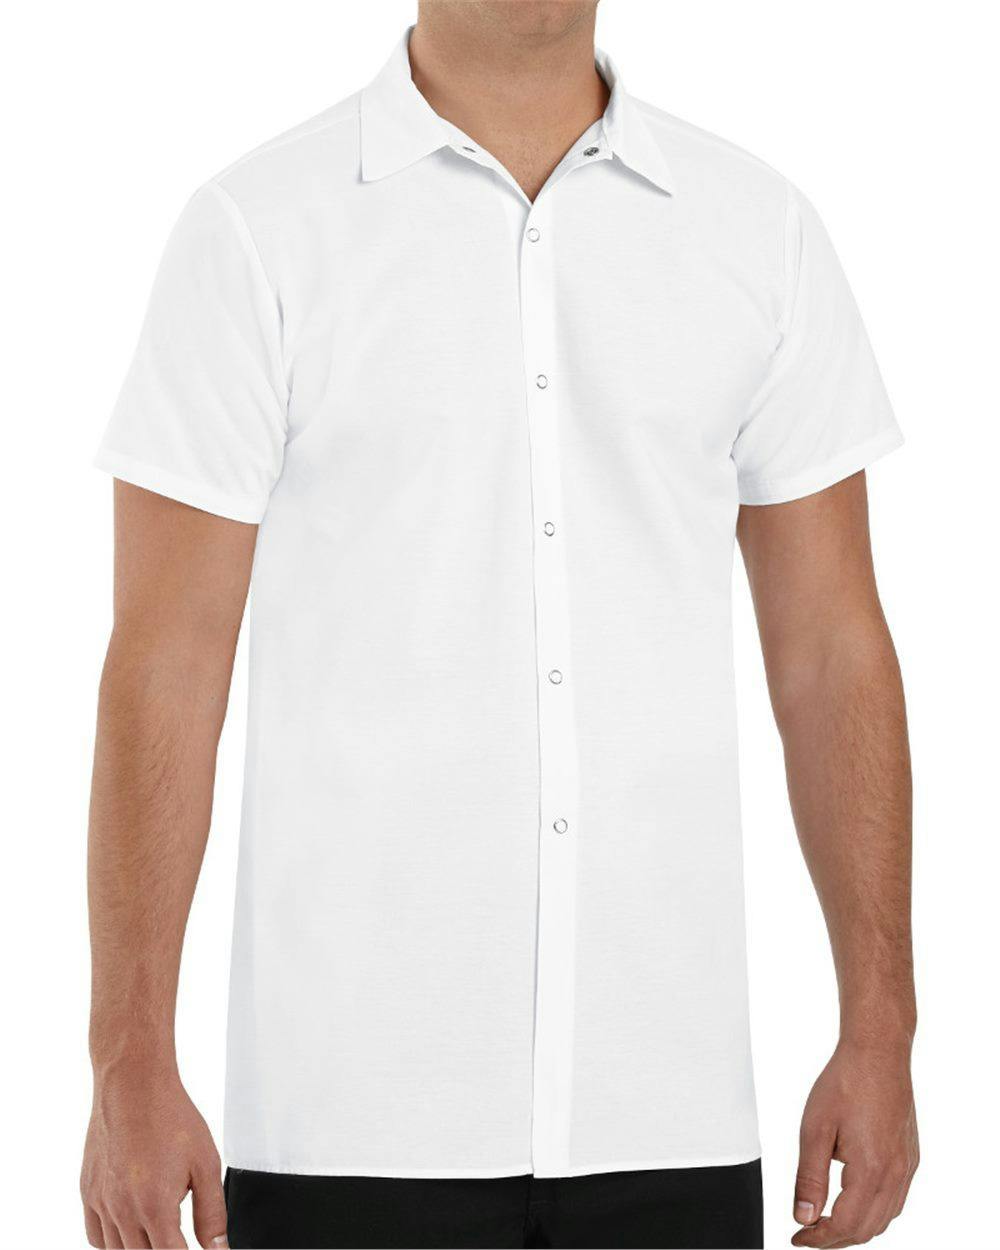 Image for Poly/Cotton Cook Shirt Longer Length - 5050L